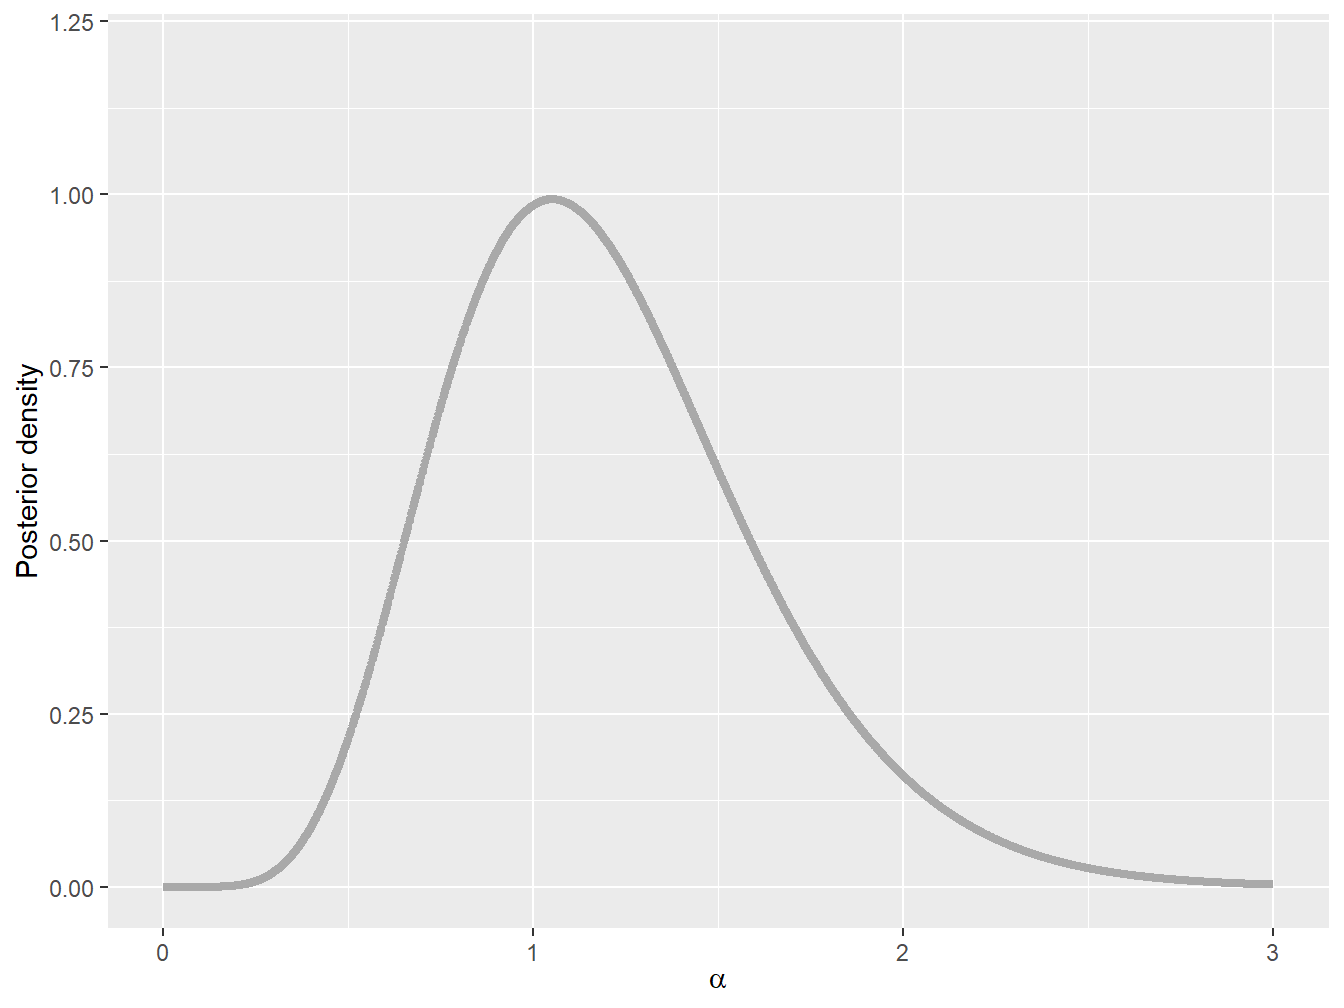 Posterior densities of parameter \(\alpha\)